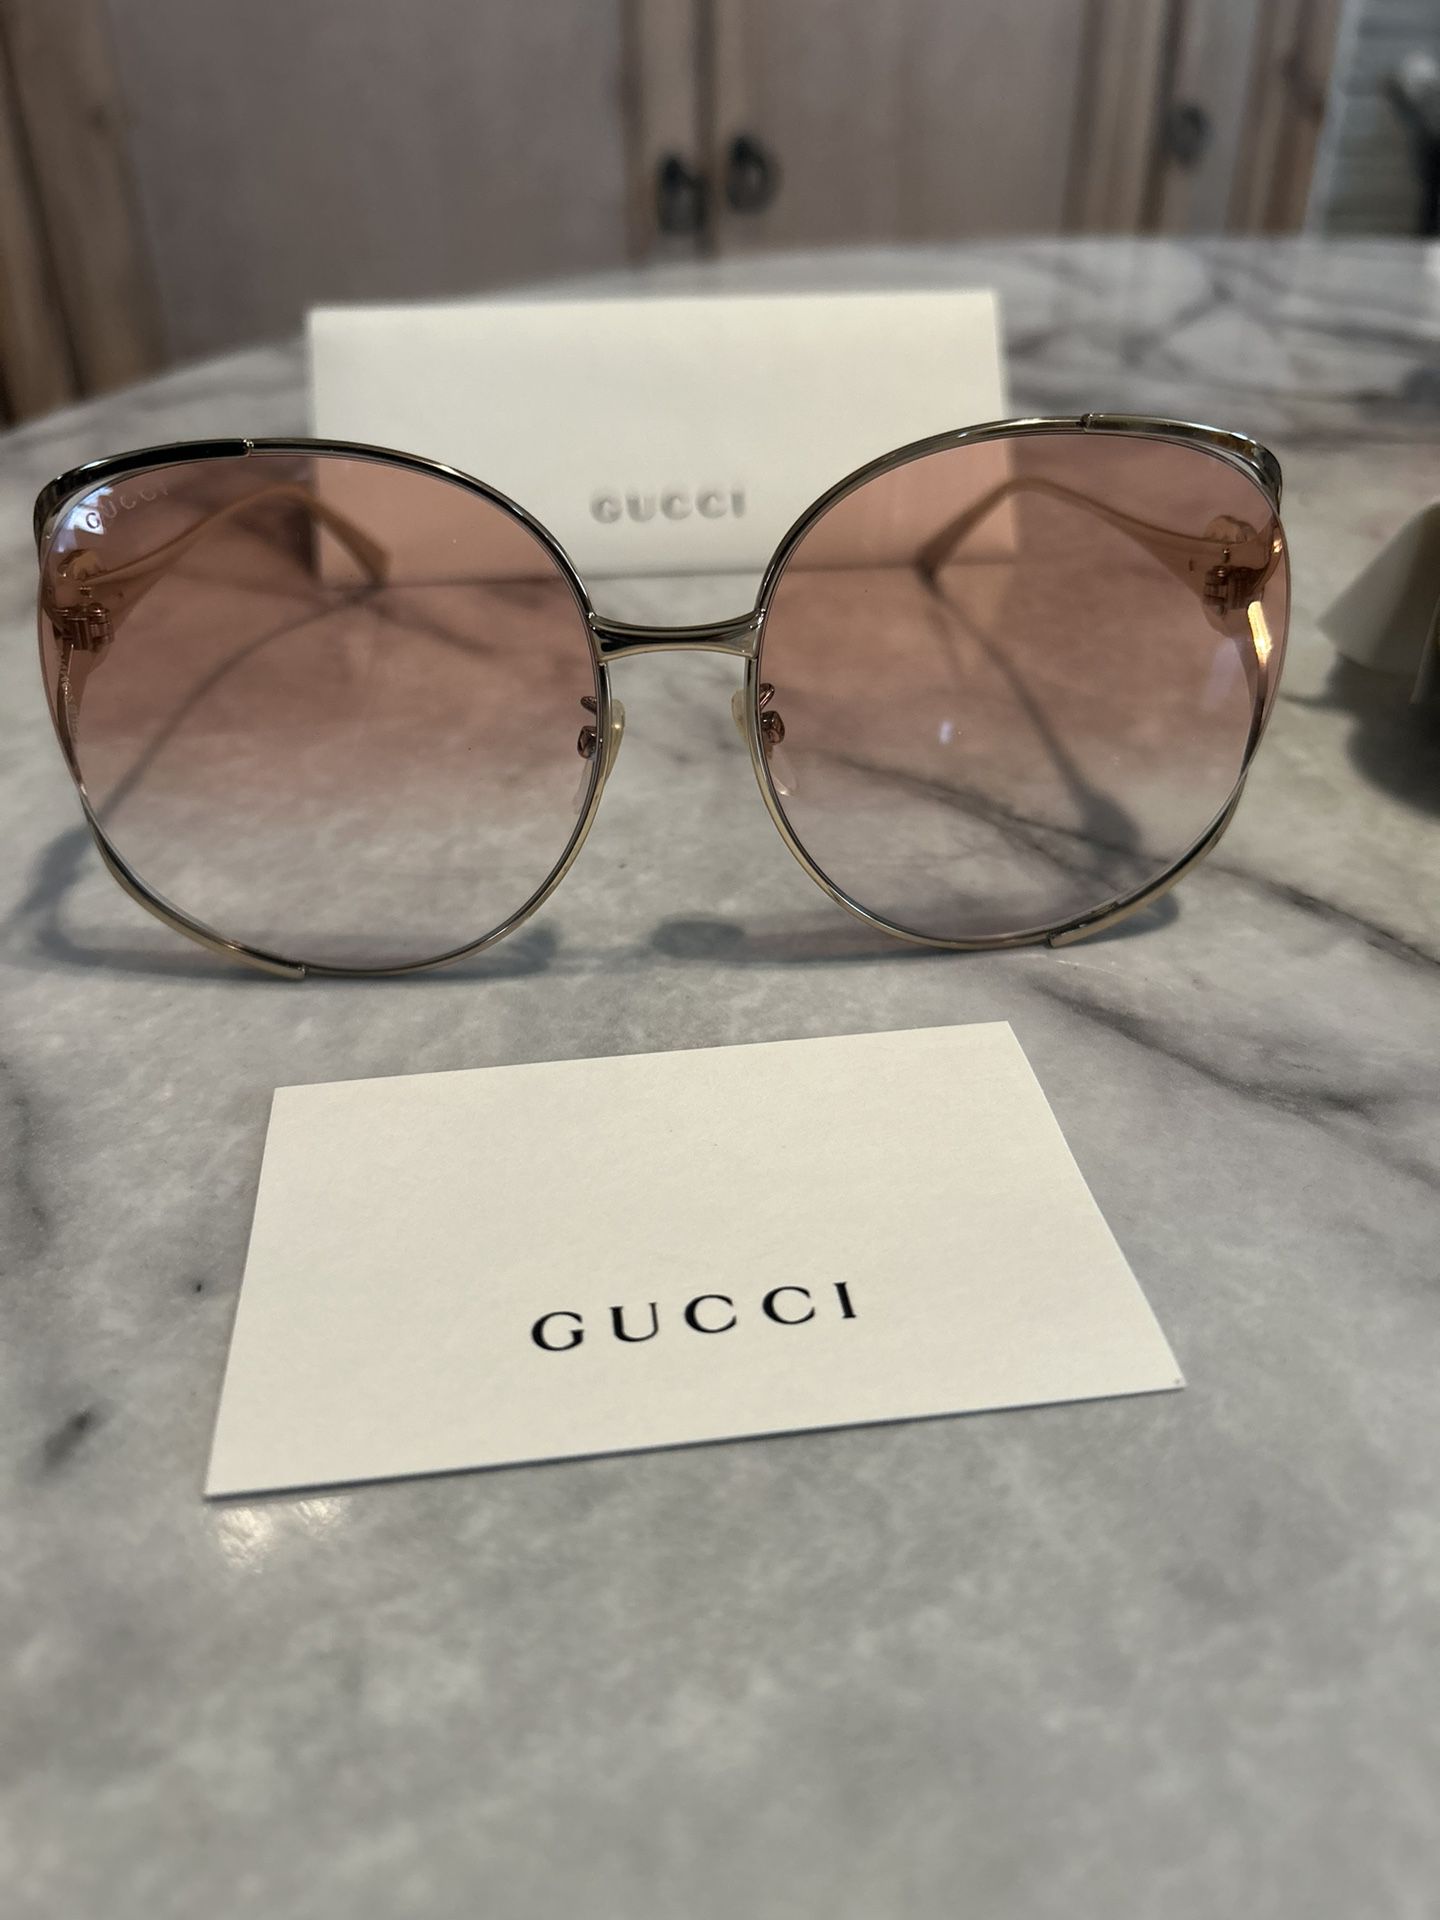 Gucci Round Sunglasses, 63 mm Gold/Brown Gradient Women's 